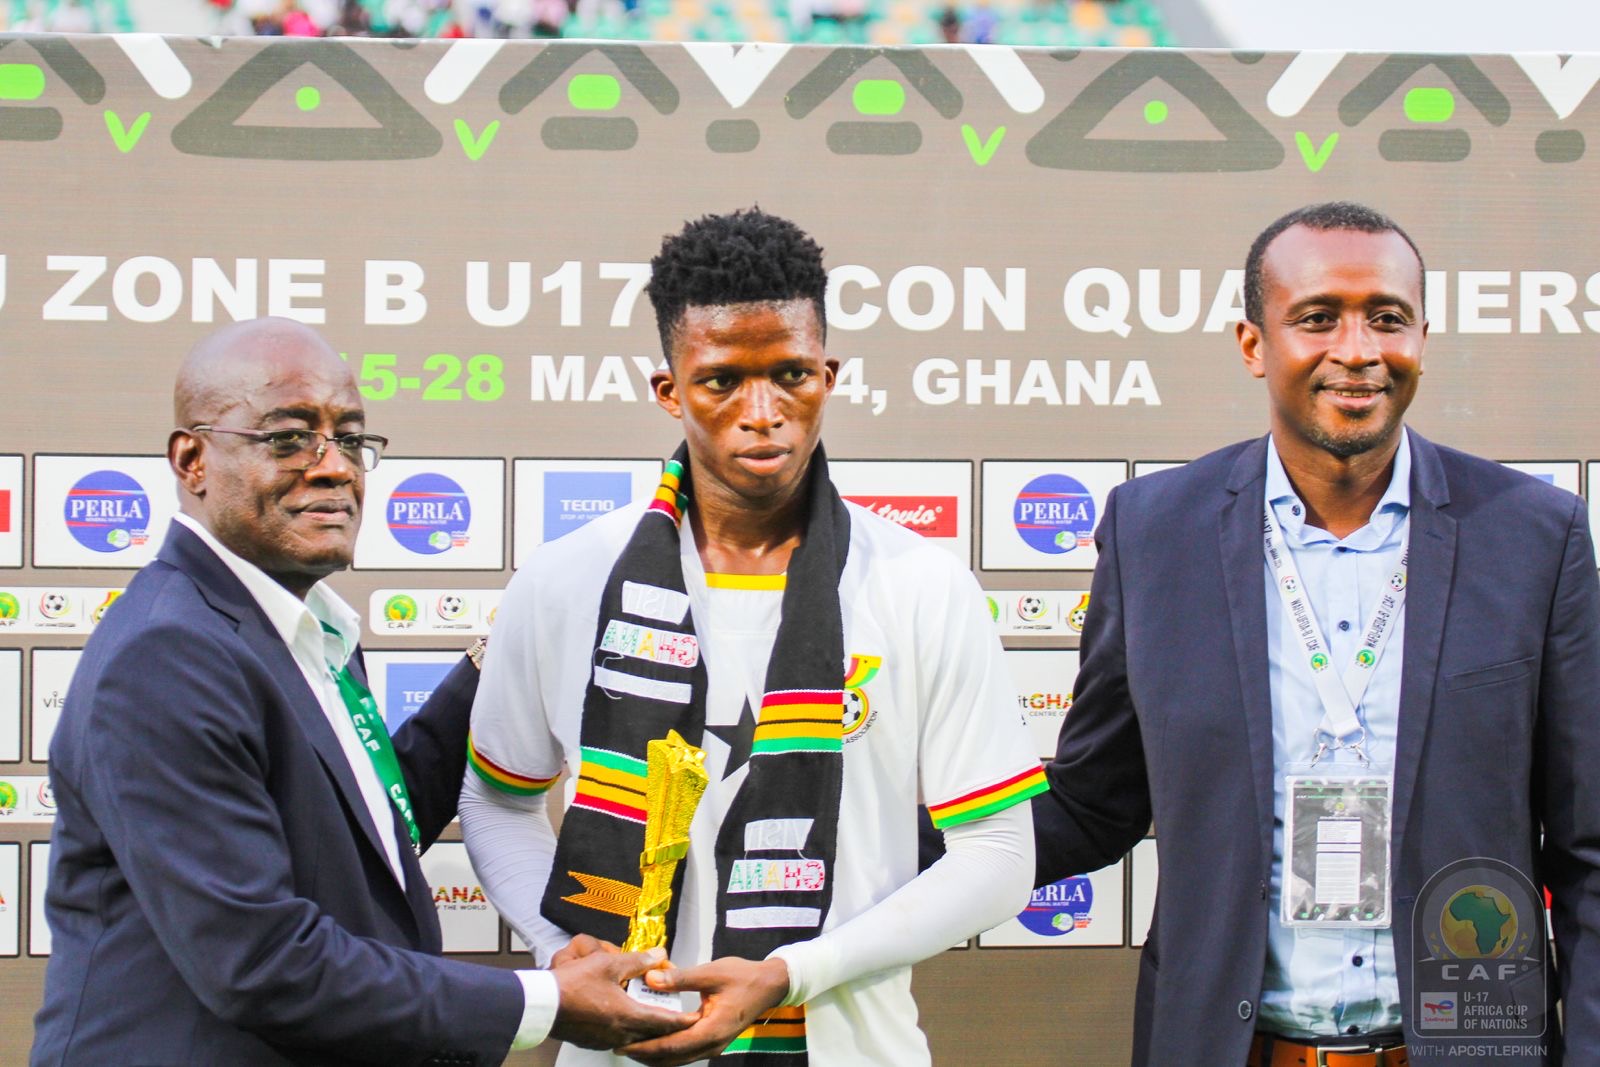 Gbafa shines again, wins another MOTM Award in Ghana-Nigeria game in WAFU Zone B U17 Tournament